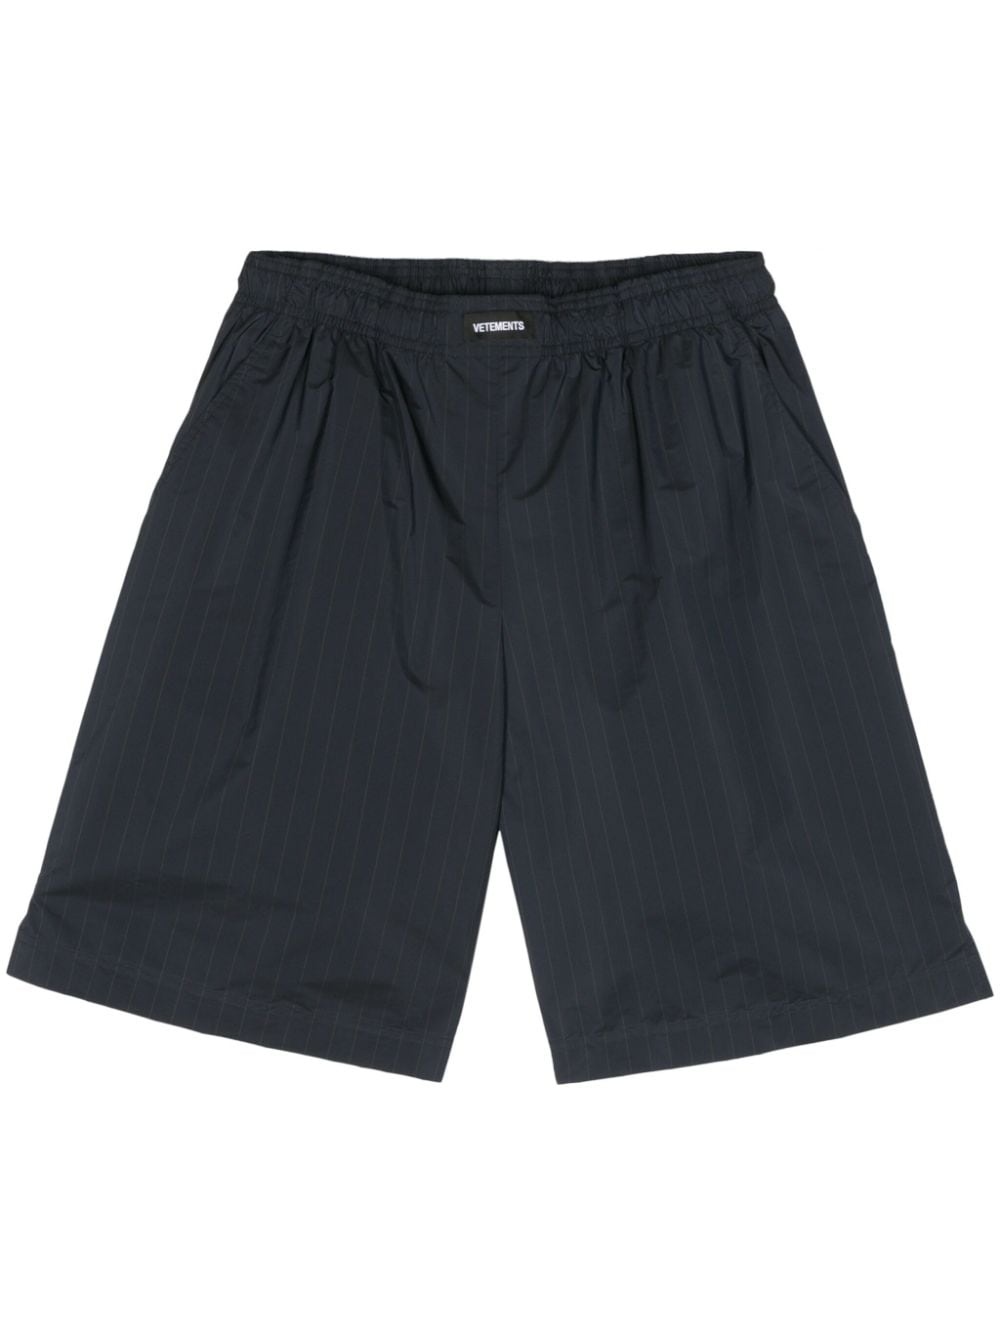 pinstripe deck shorts - 1